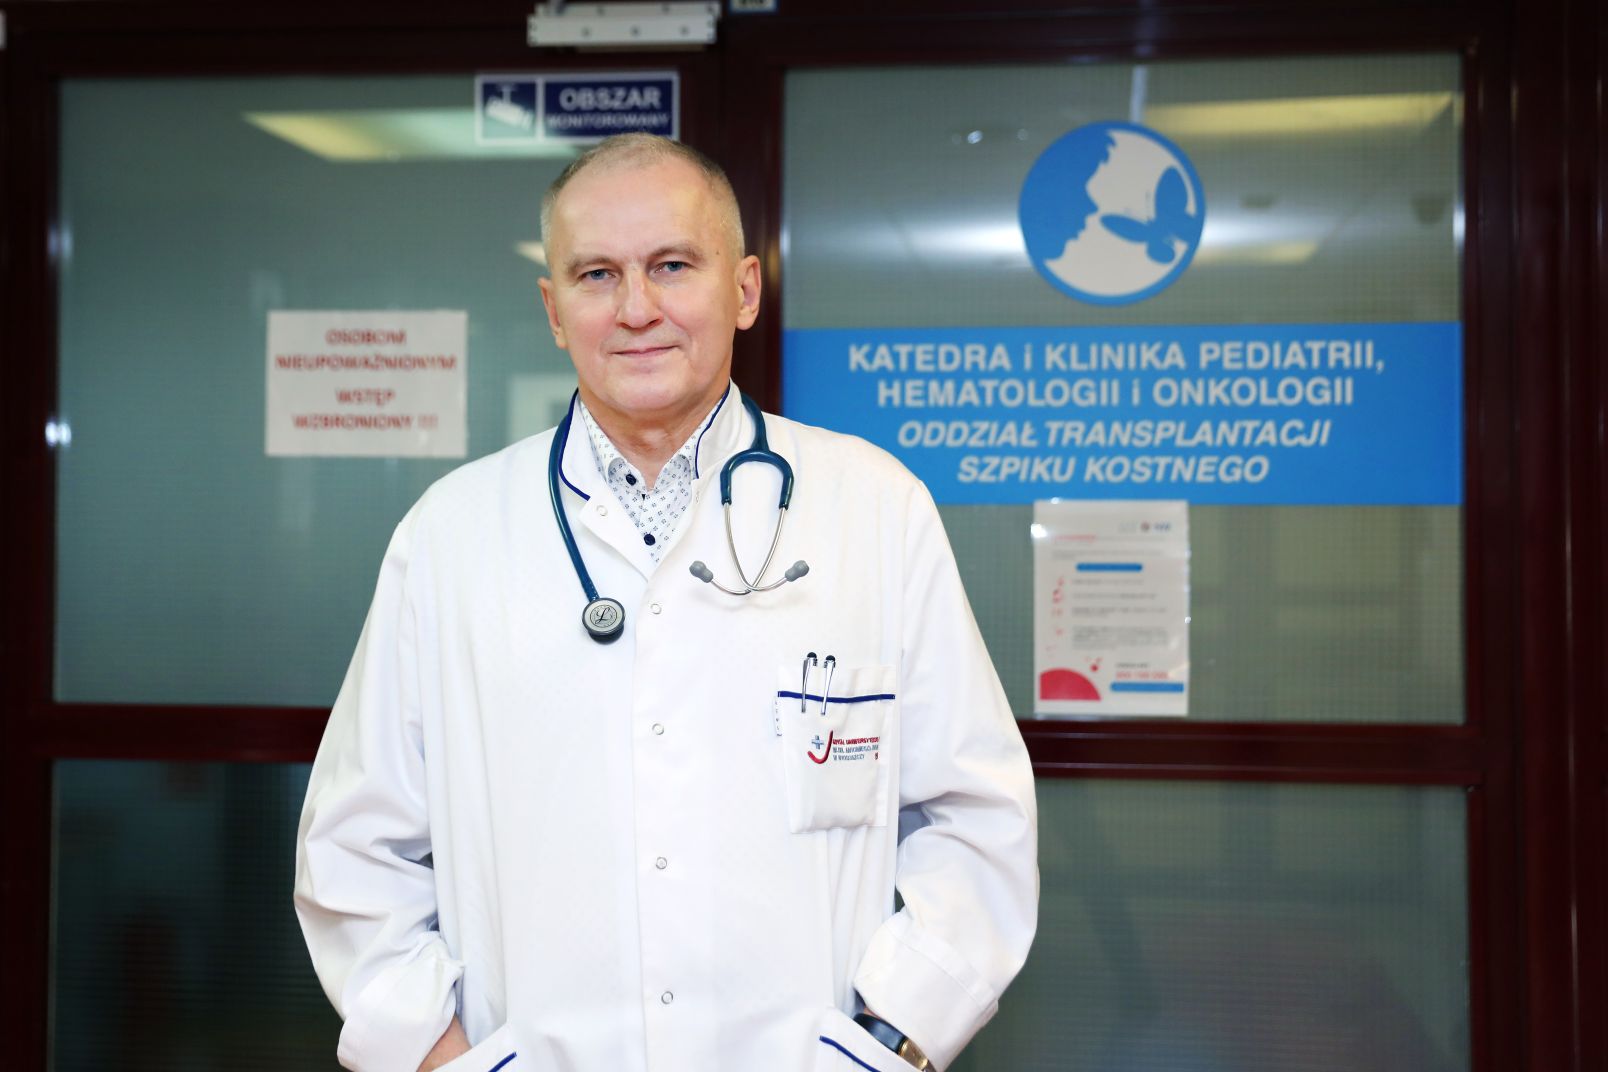 Portret prof. dr. hab. Jana Styczyńskiego, transplantologa z Collegium Medicum UMK.